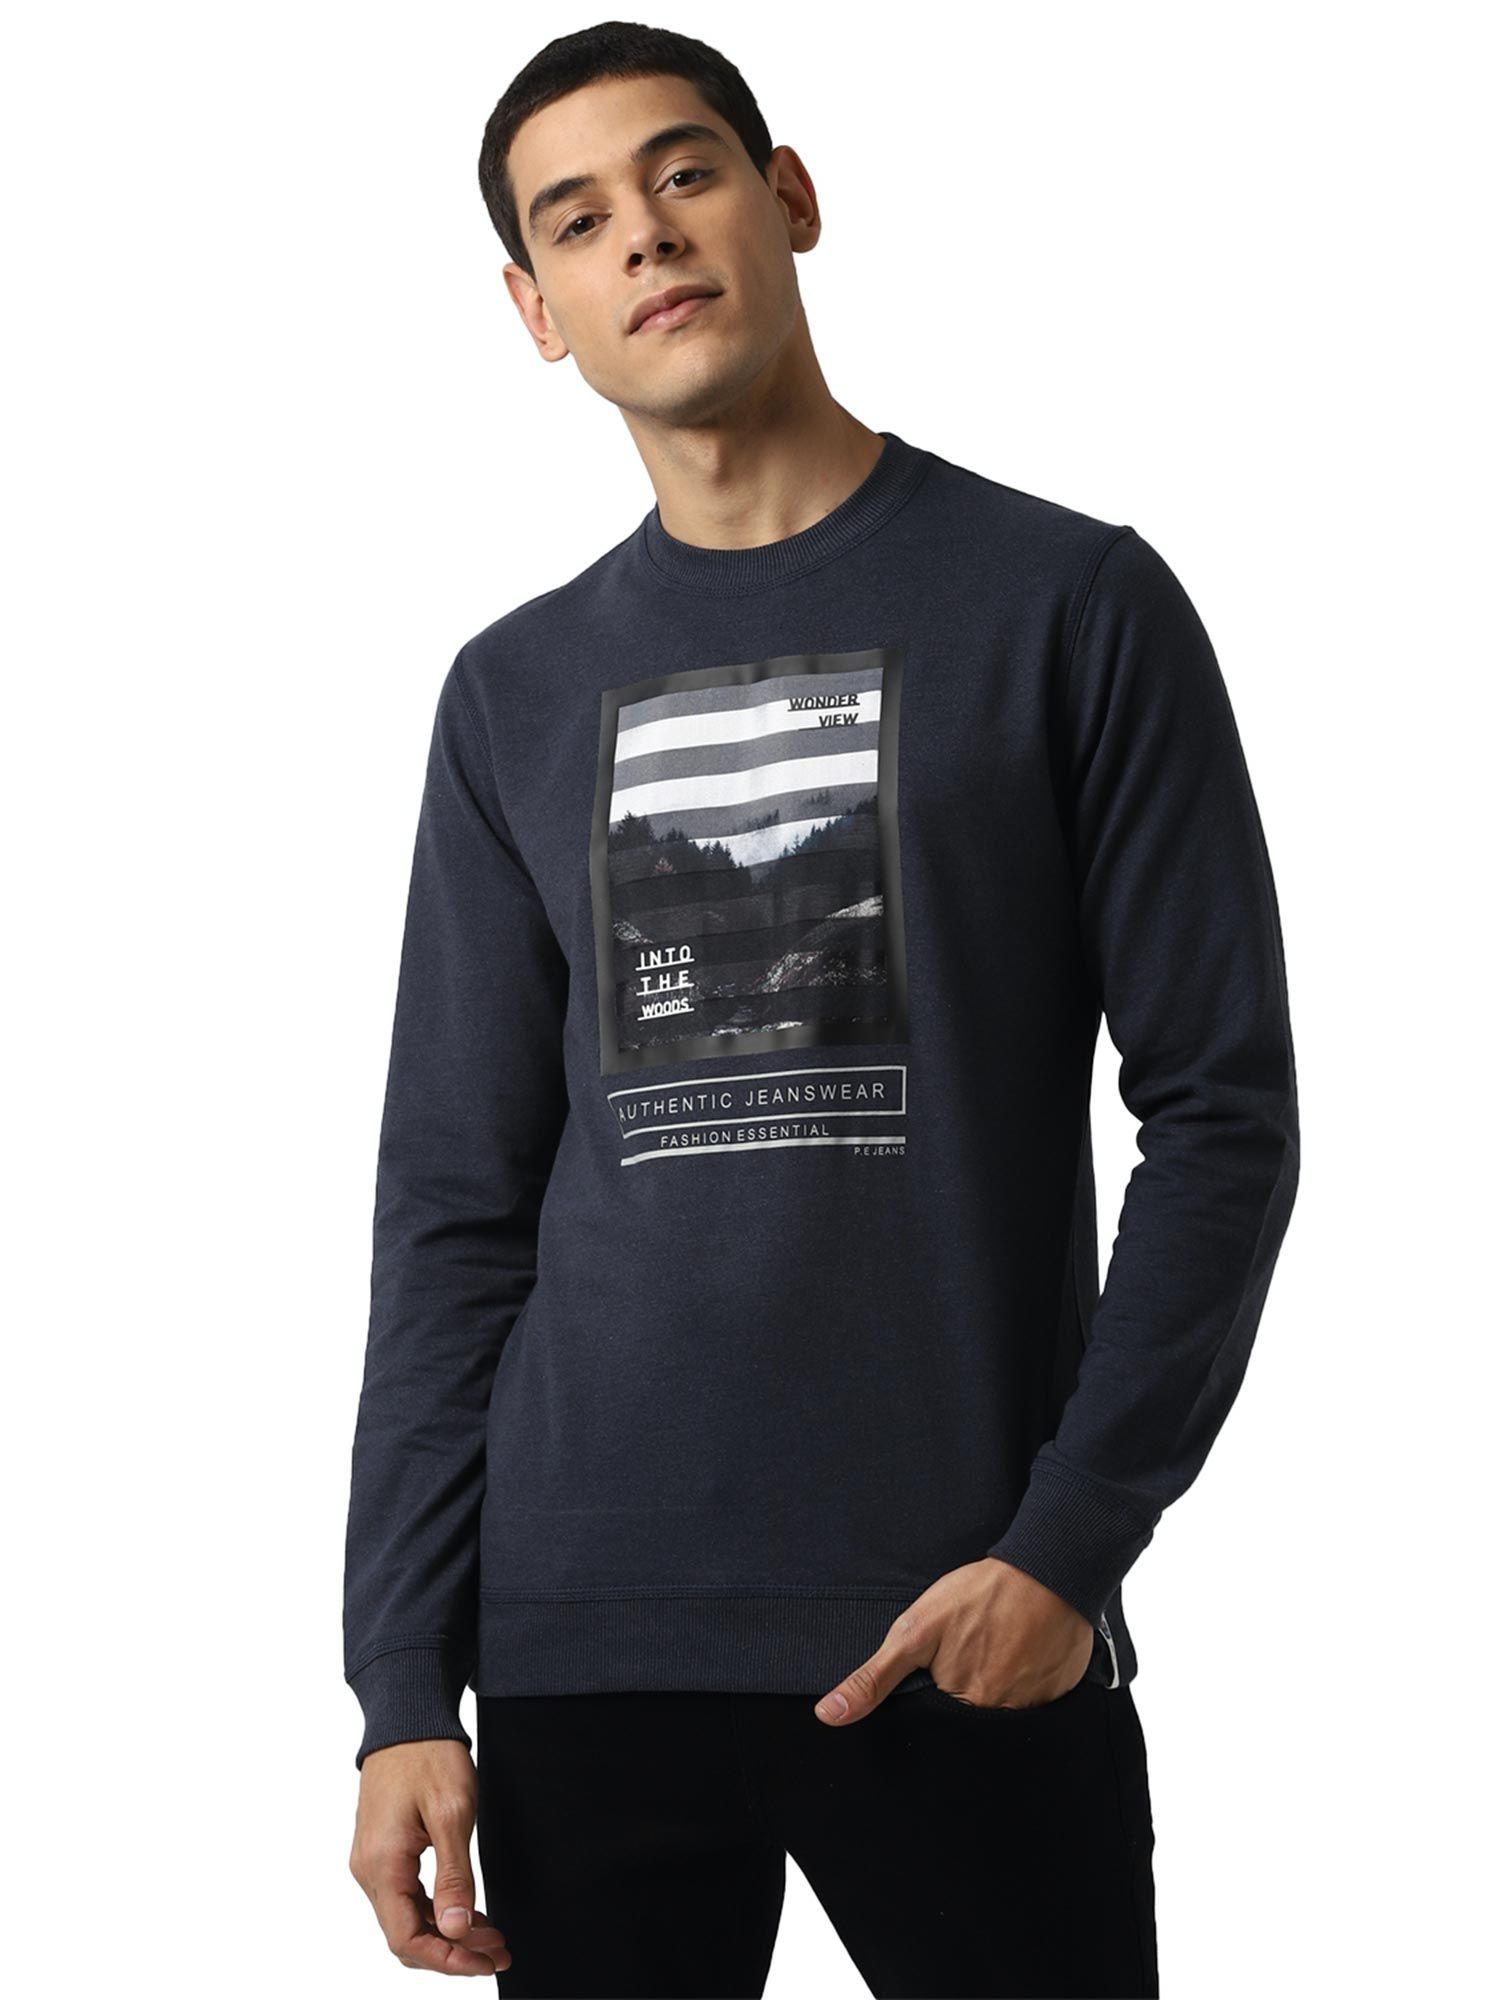 grey sweatshirt